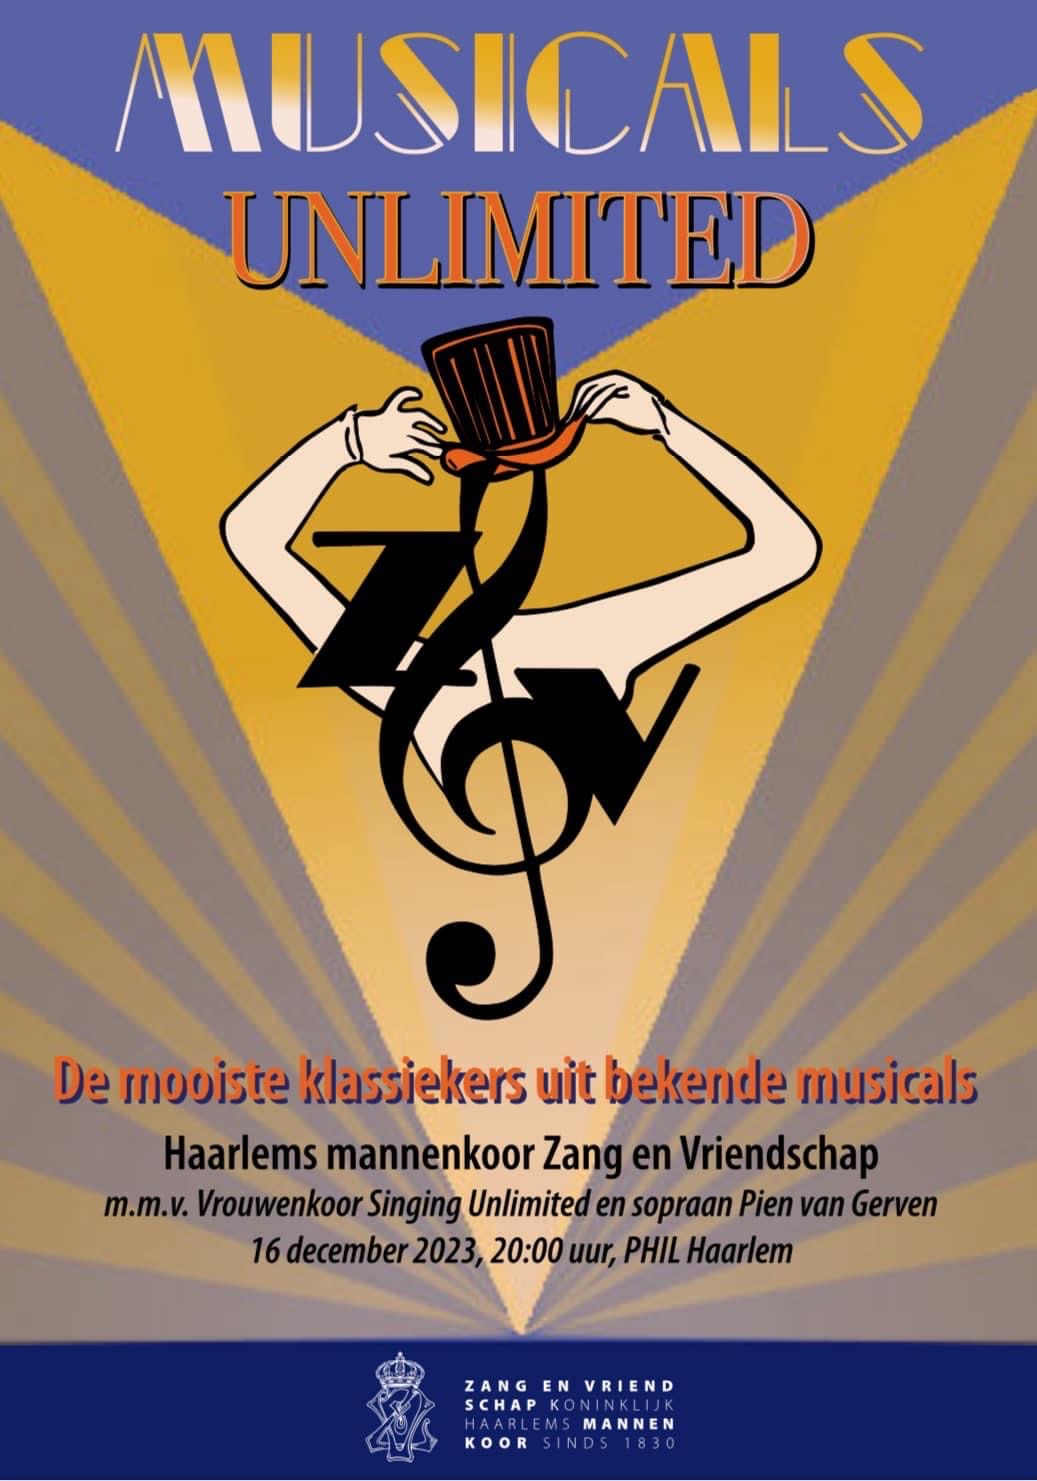 Musicals Unlimited